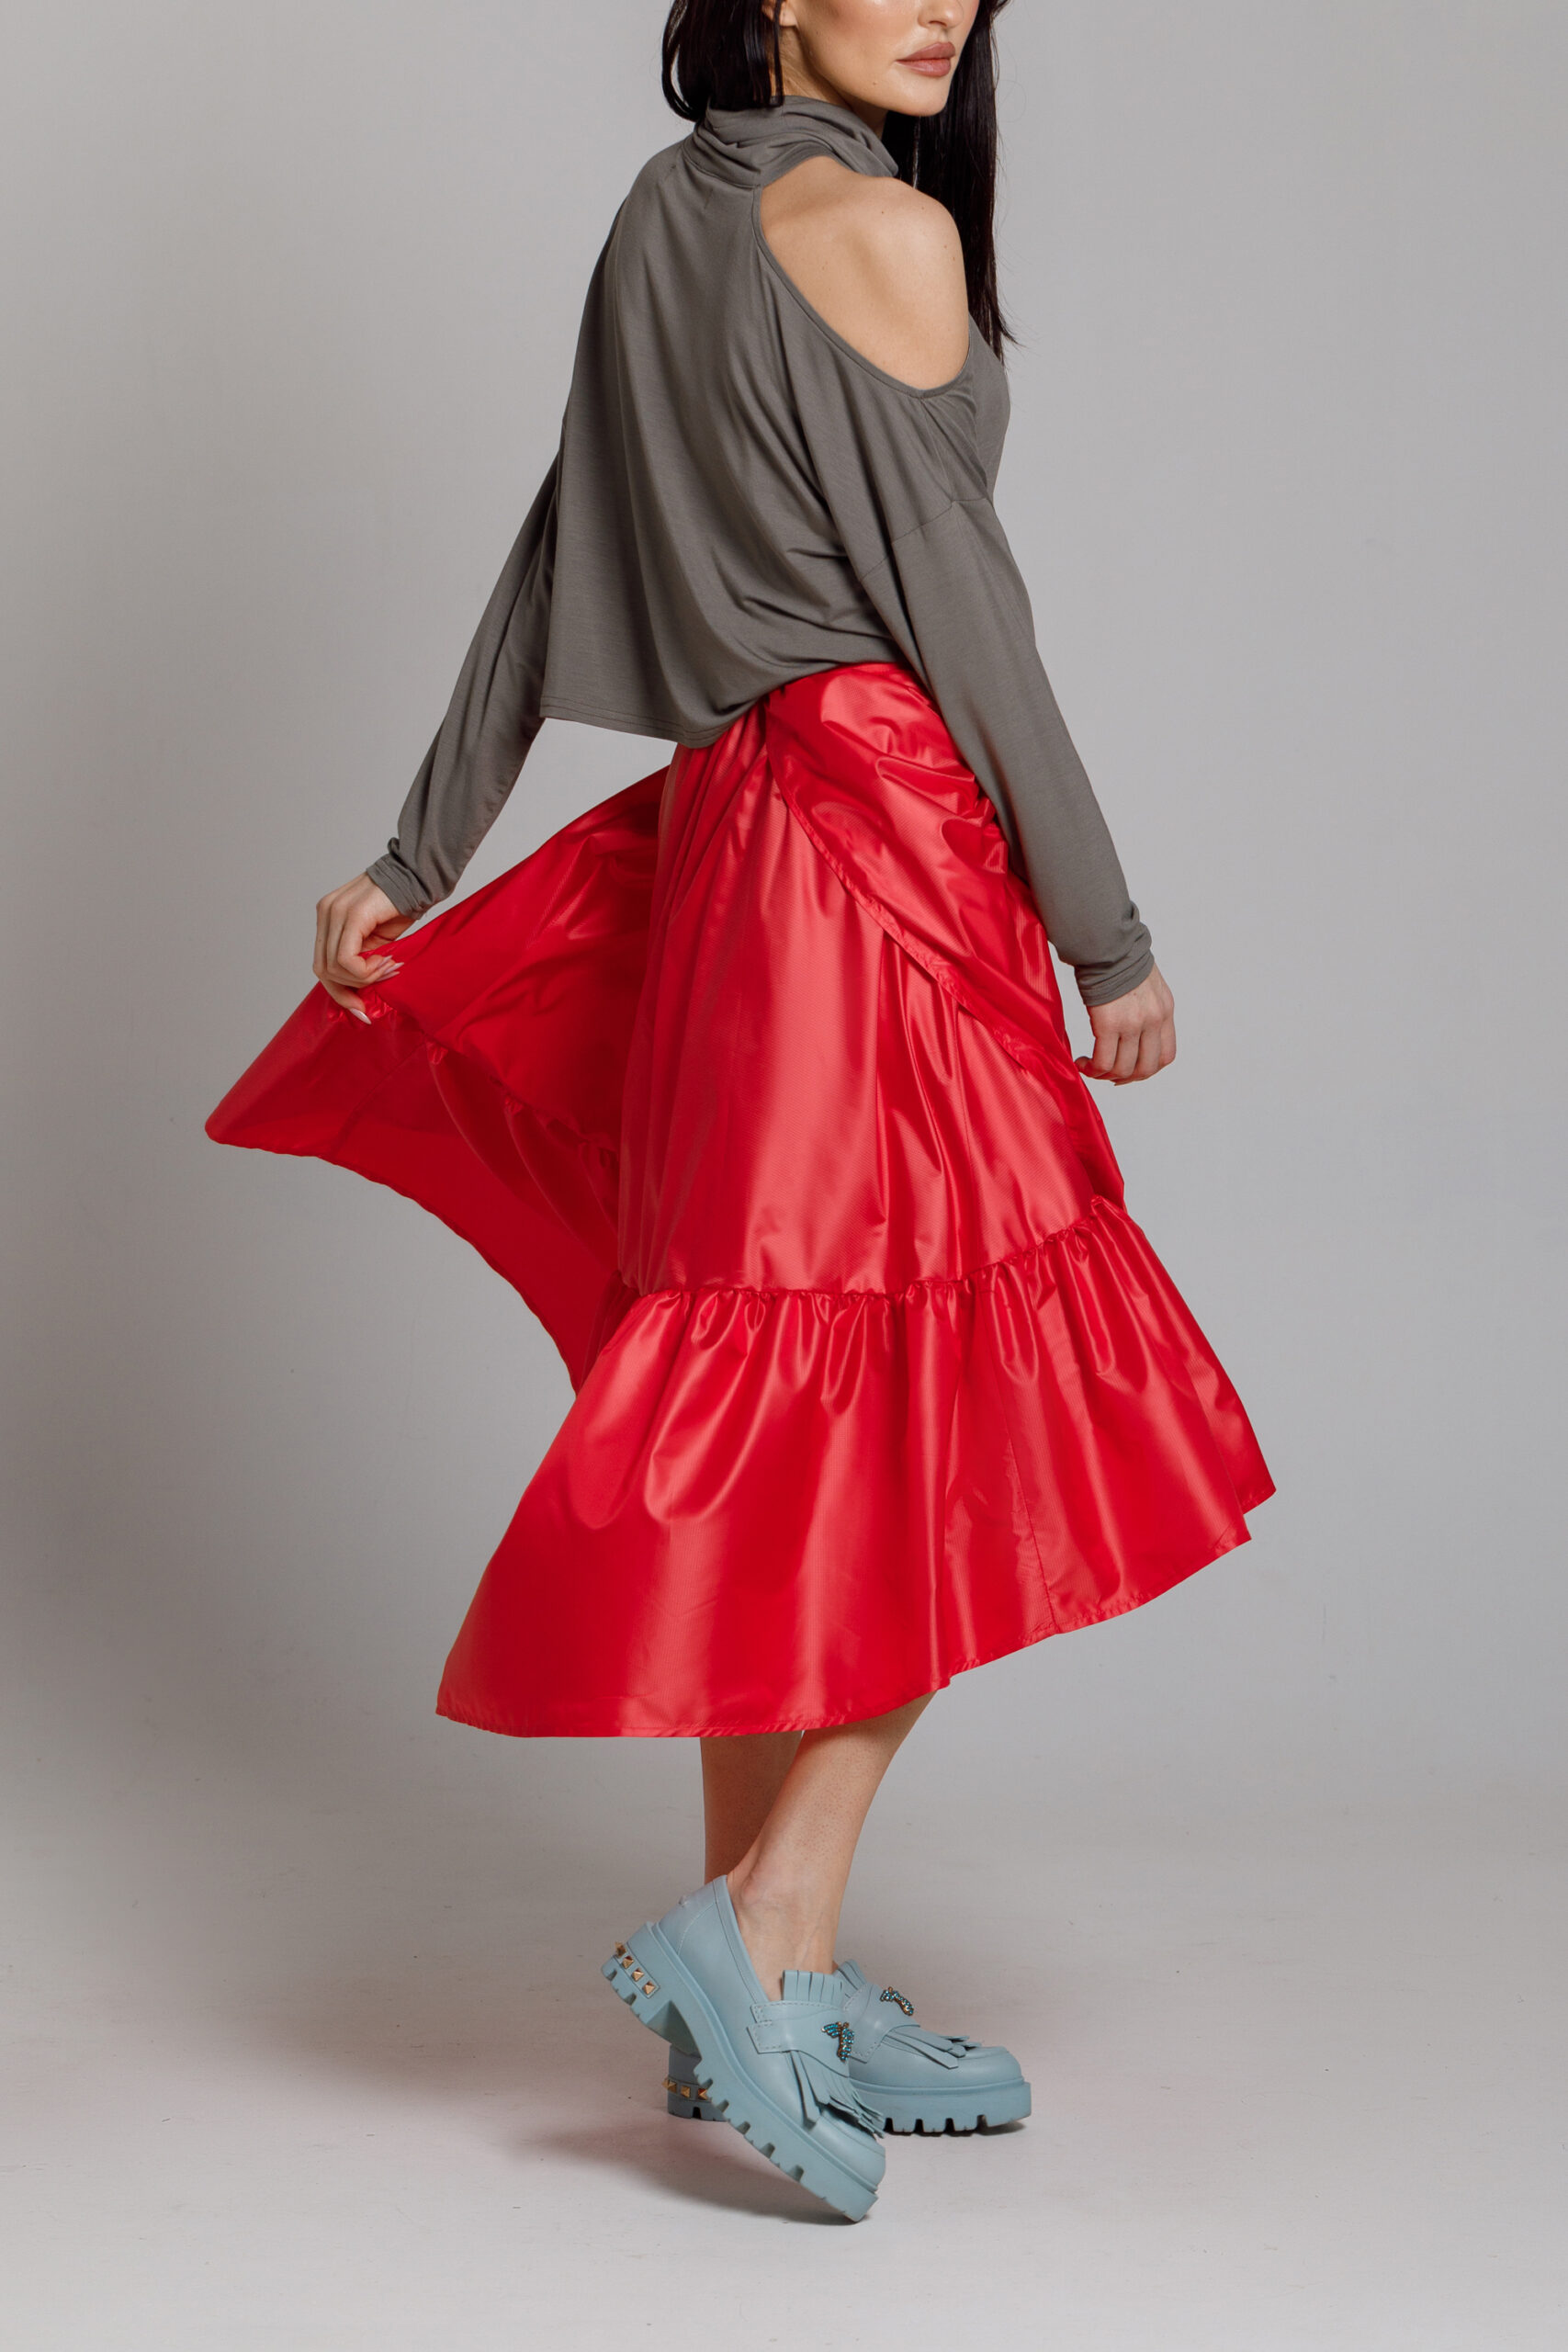 Red LAYLA skirt. Natural fabrics, original design, handmade embroidery